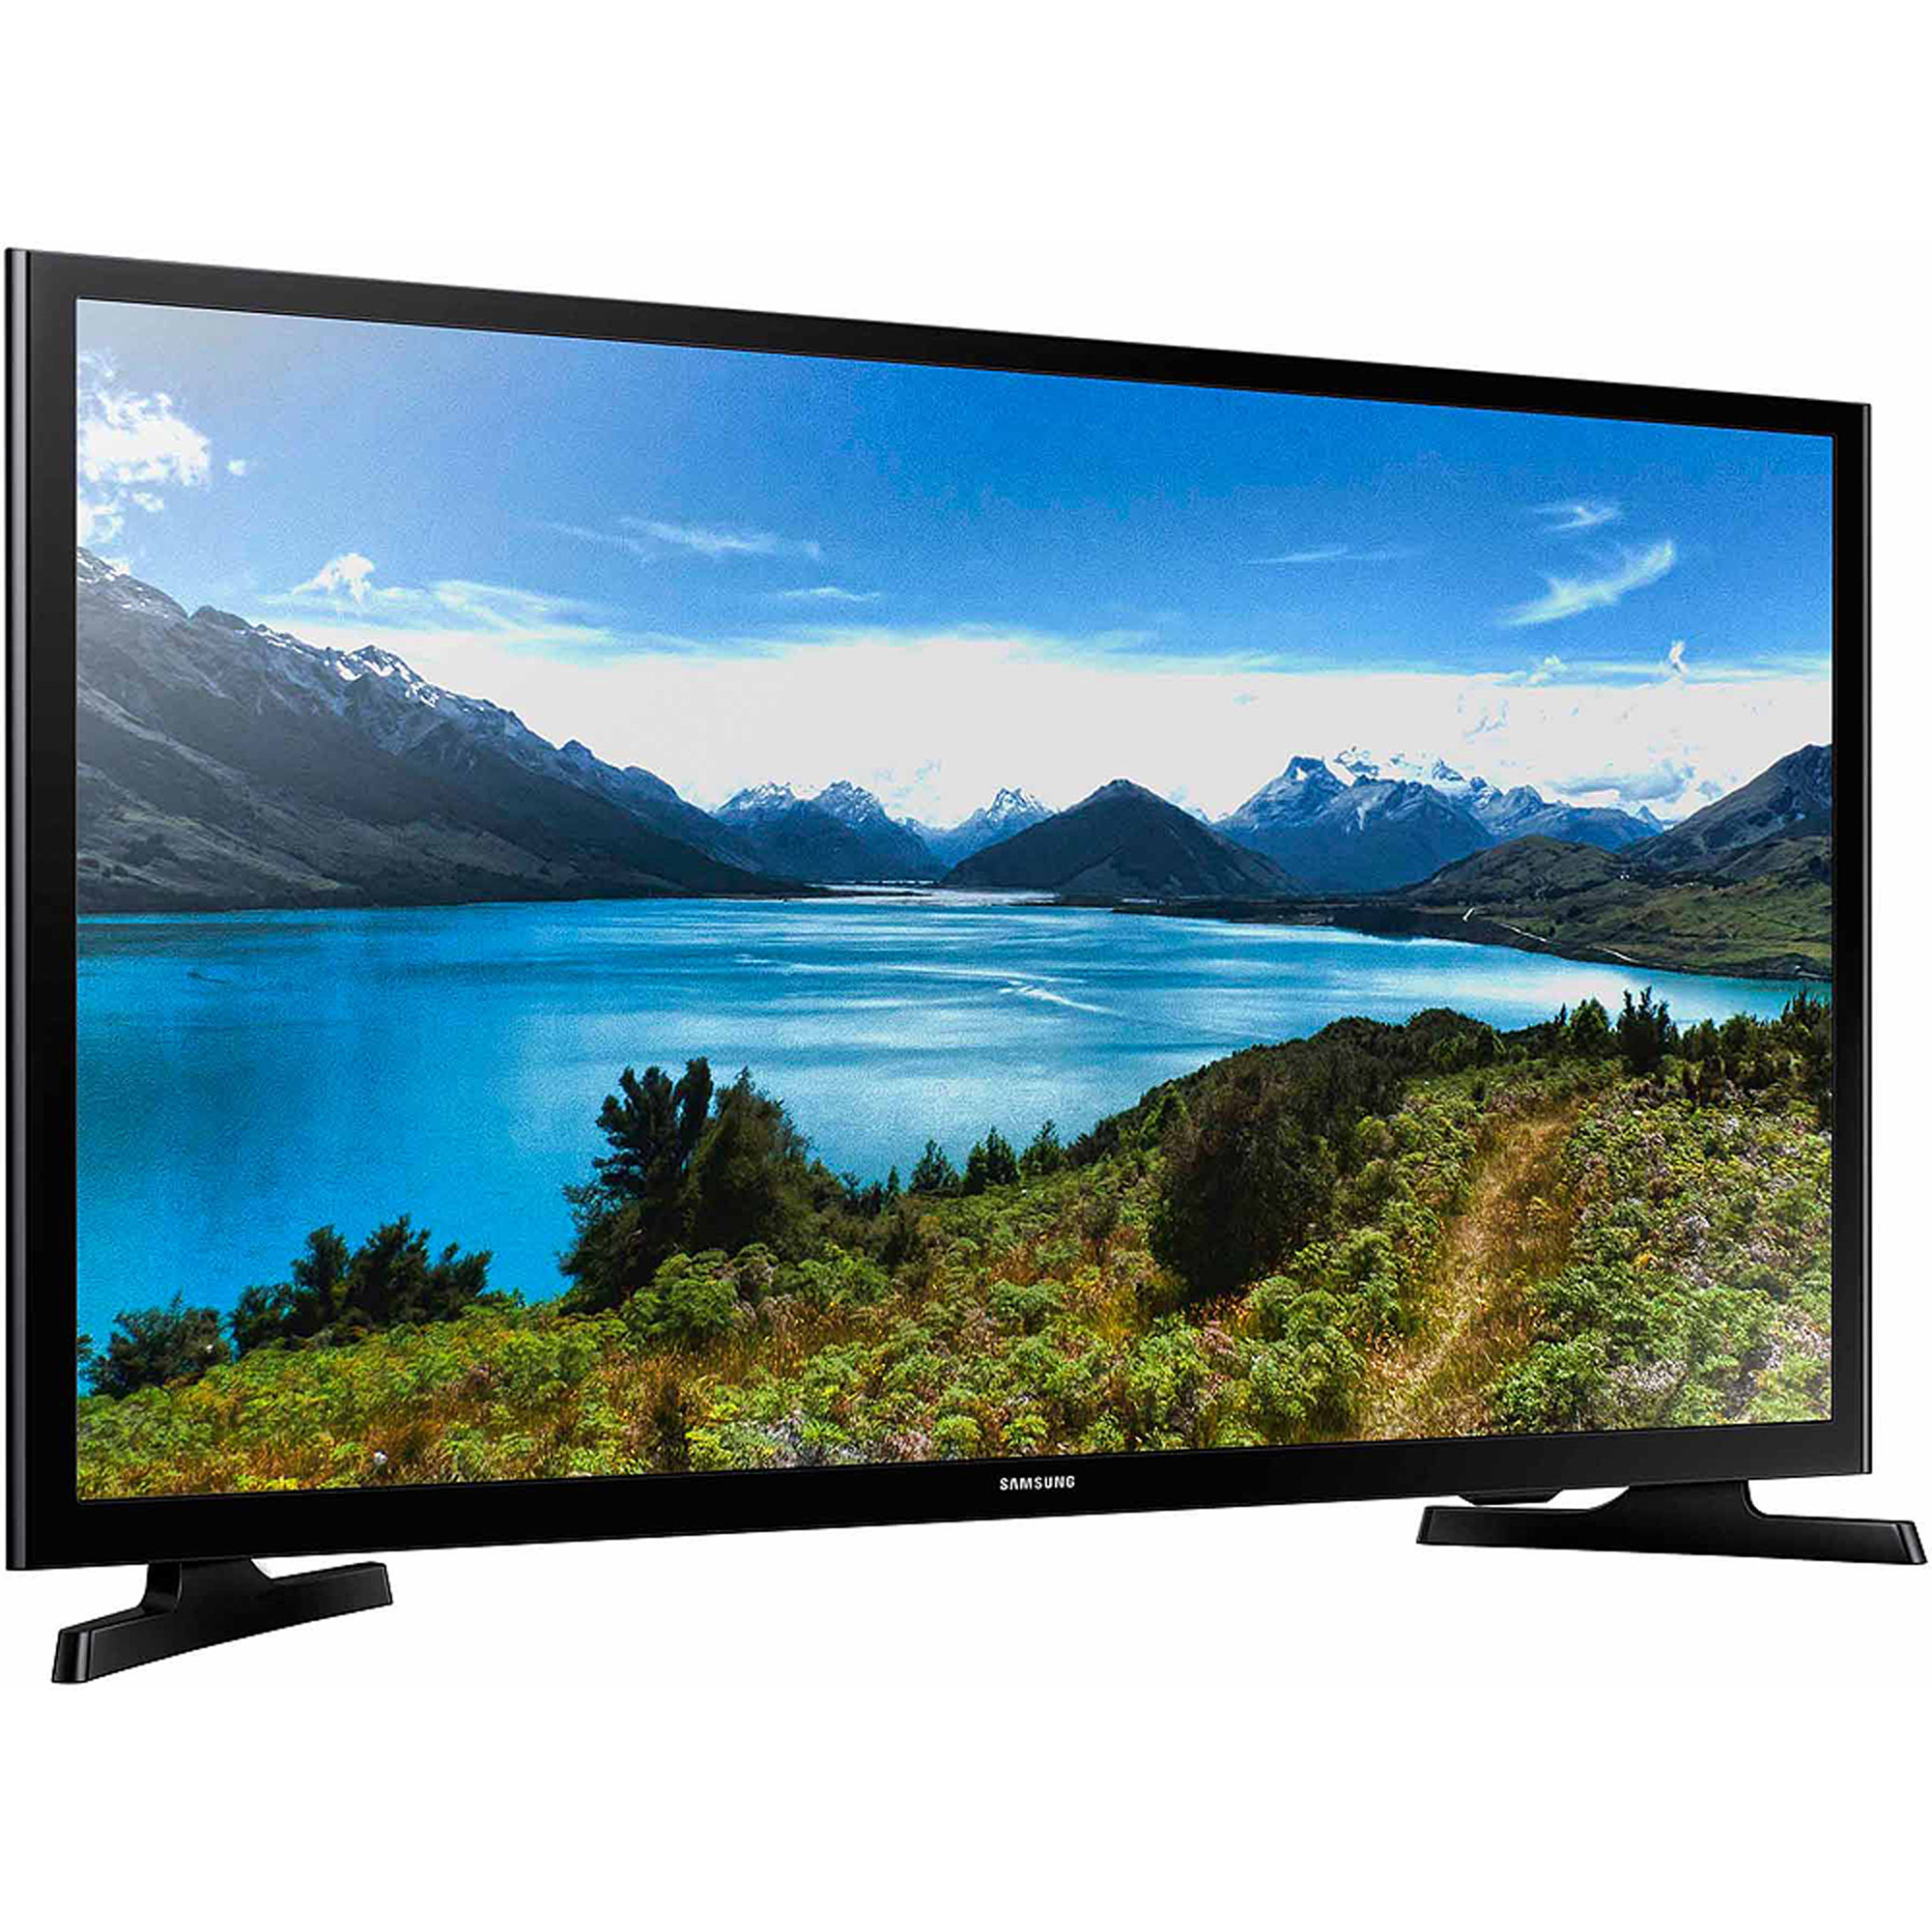 SAMSUNG 32" Class HD (720P) LED TV (UN32J4000BFXZA) (Discontinued) - image 2 of 6